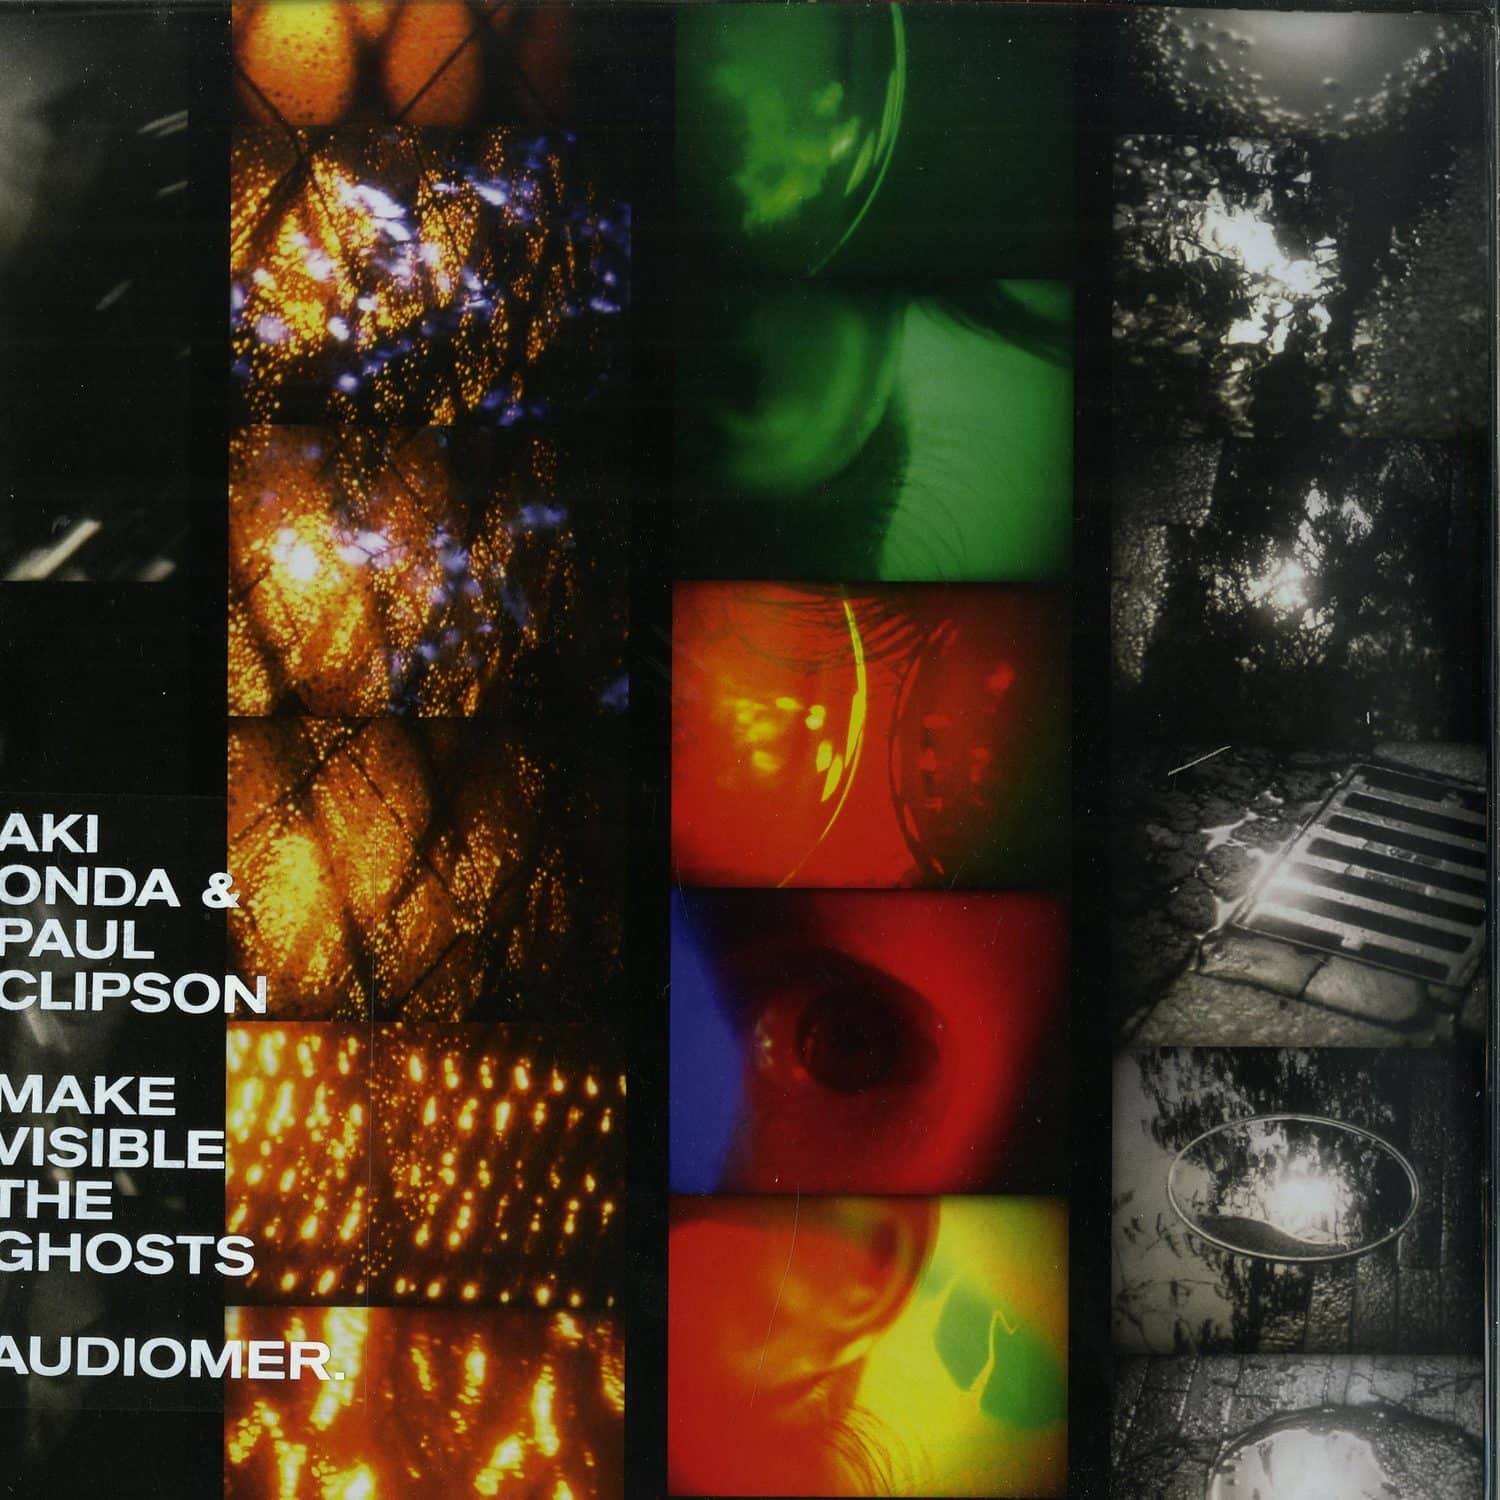 Aki Onda + Paul Clipson - MAKE VISIBLE THE GHOSTS